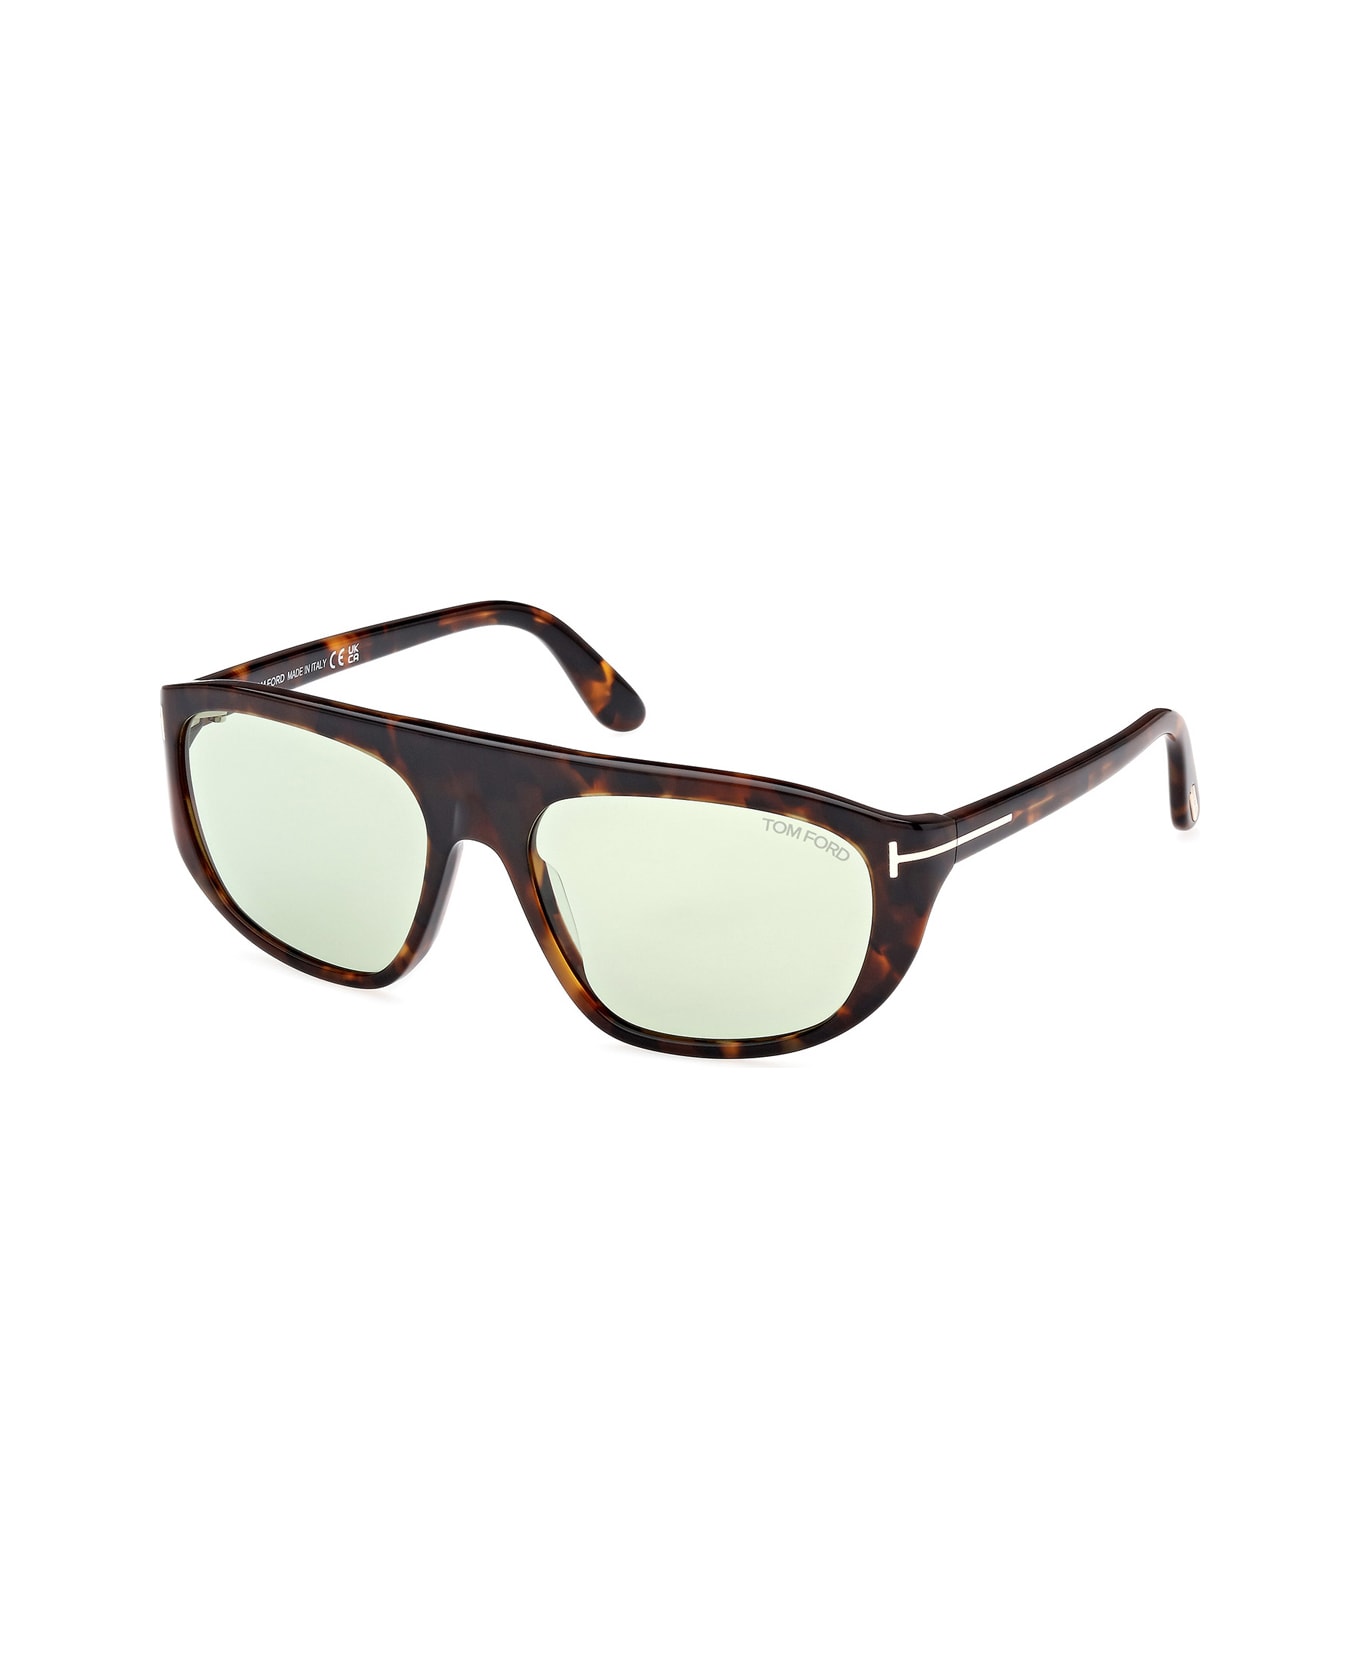 Tom Ford Eyewear Ft1002 Sunglasses - Marrone